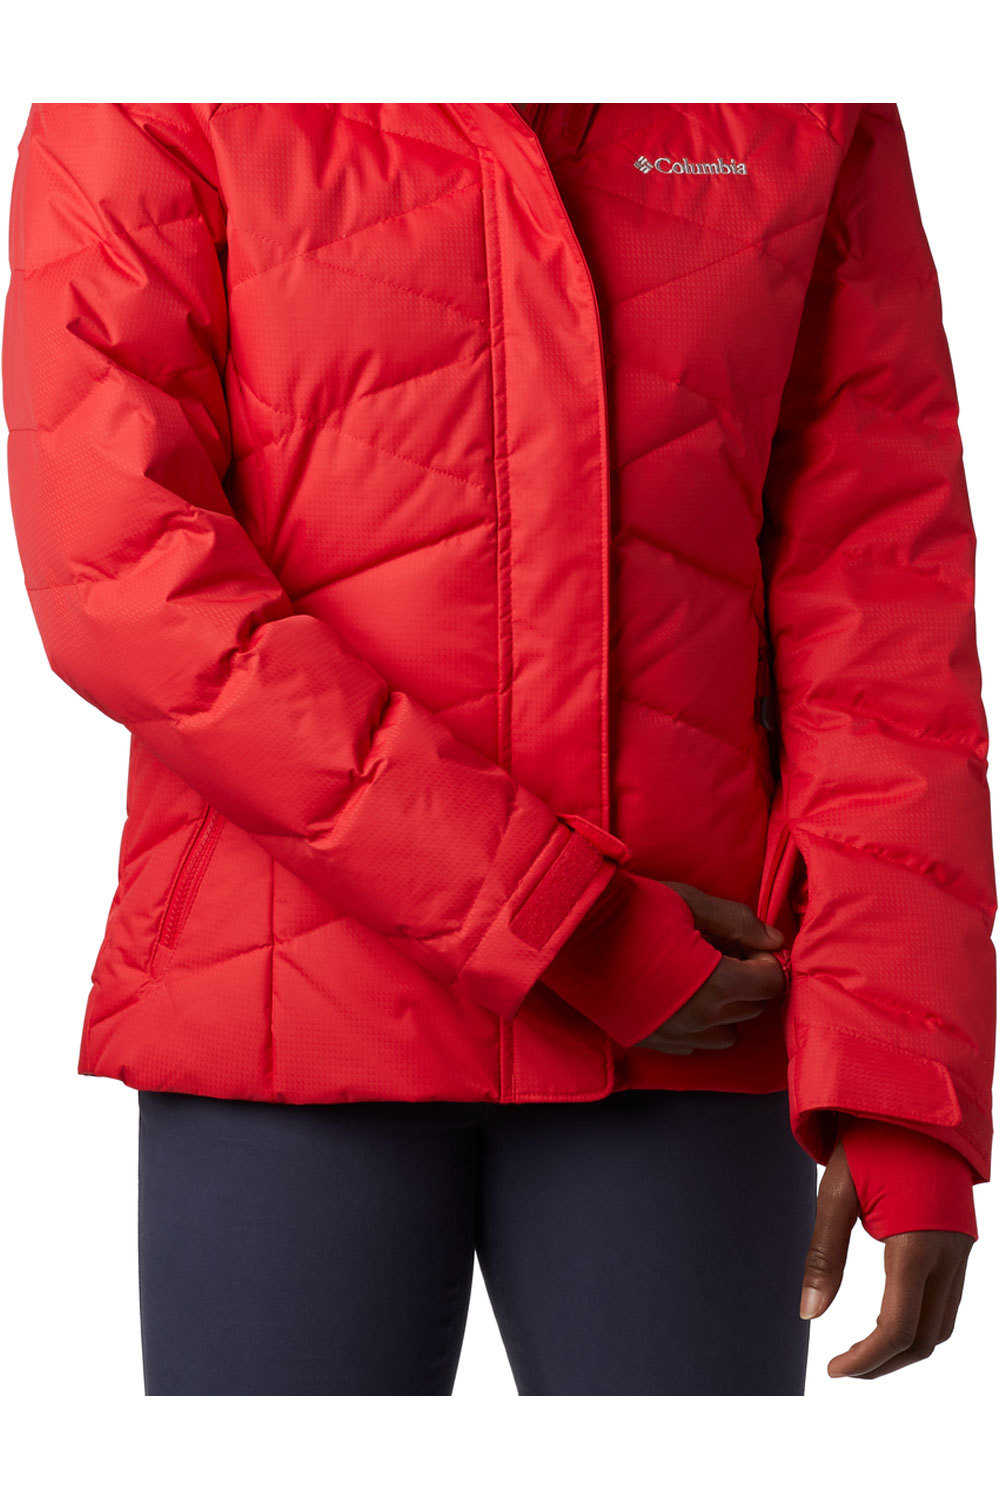 Columbia chaqueta esquí mujer LAY D DOWN JKT W RED vista trasera